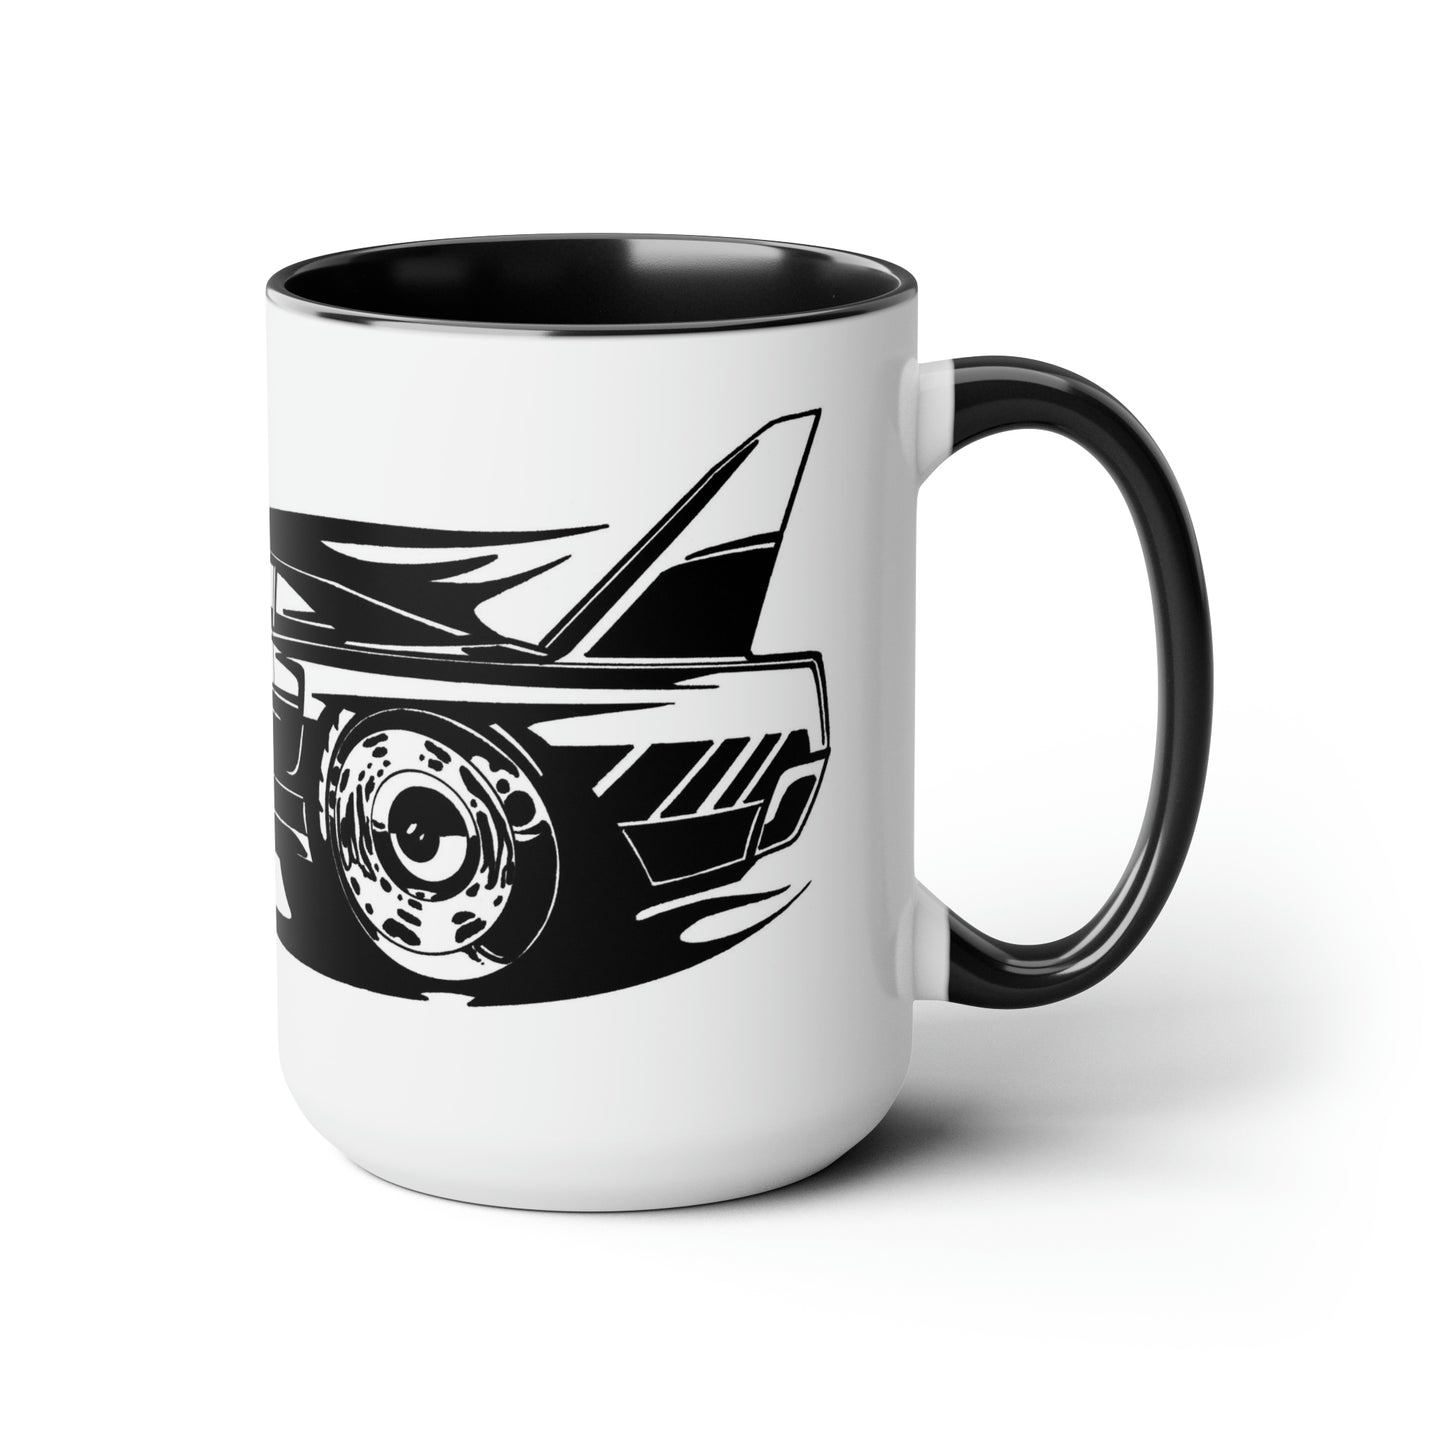 PLYMOUTH SUPERBIRD Coffee Mug, 11oz, Mopar, Dodge Mug, Mopar Mug, Car Mug, Muscle Car Mug, Classic Car Mug, Musclecar